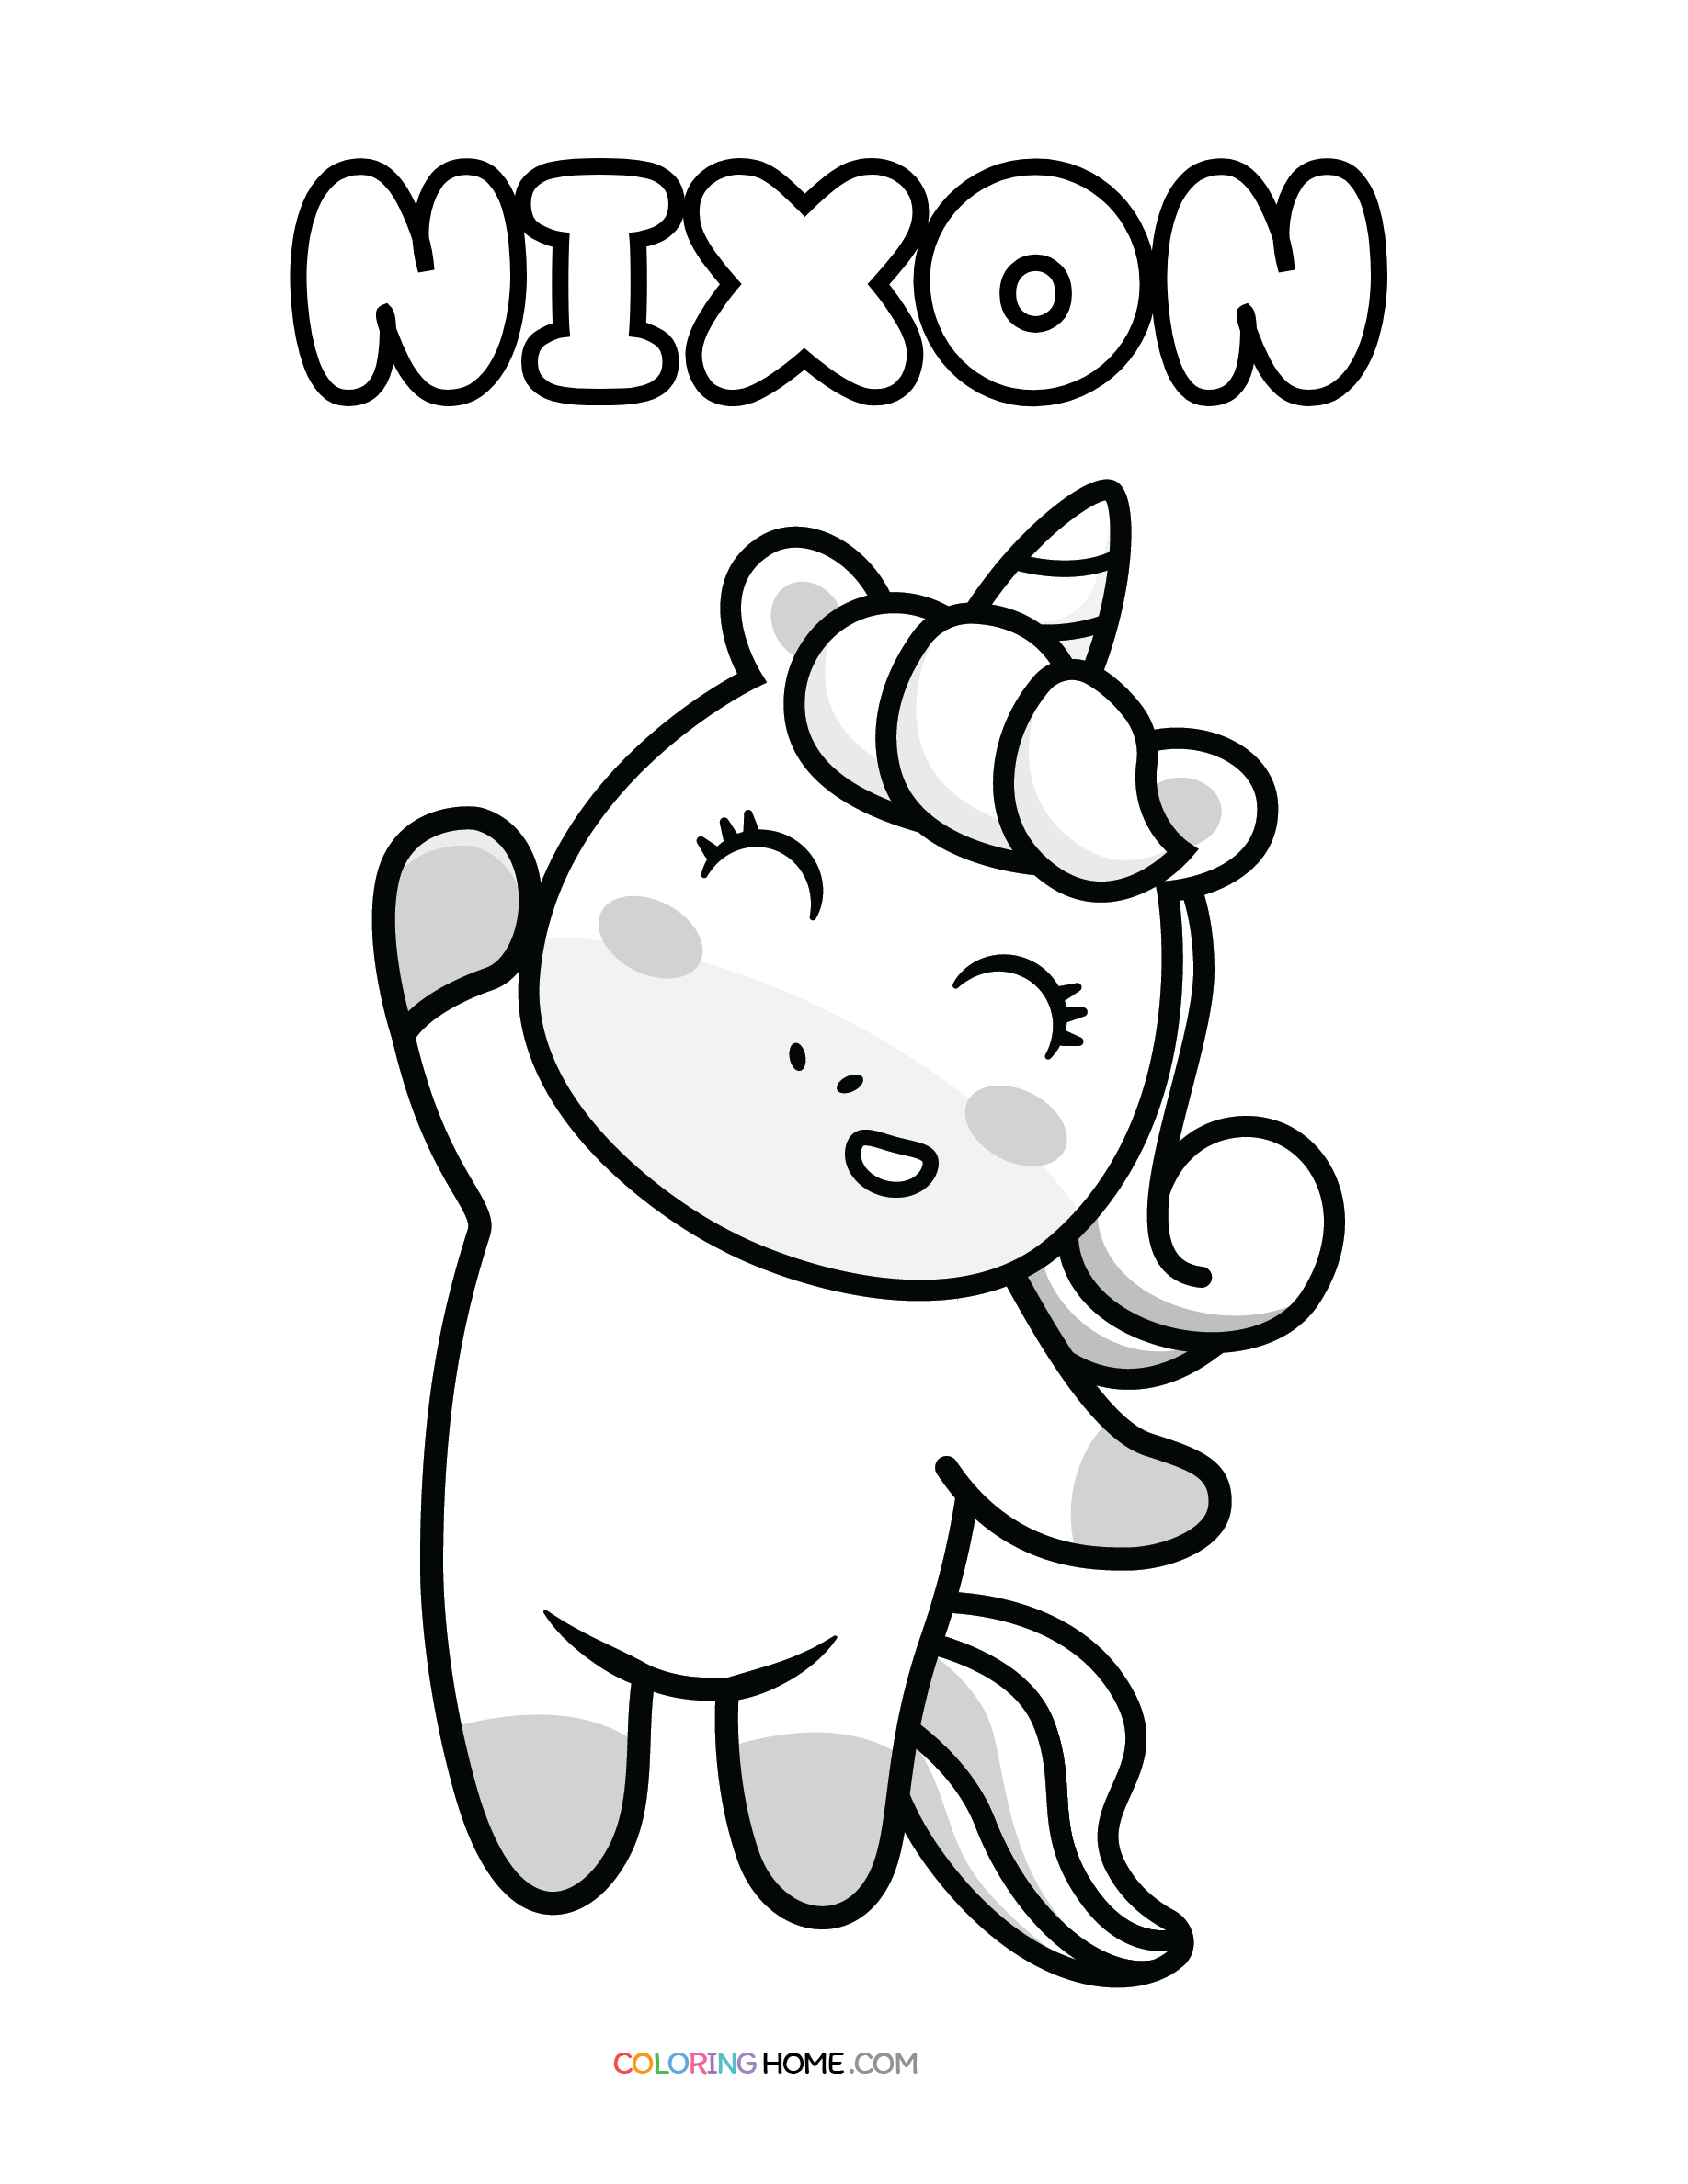 Nixon unicorn coloring page